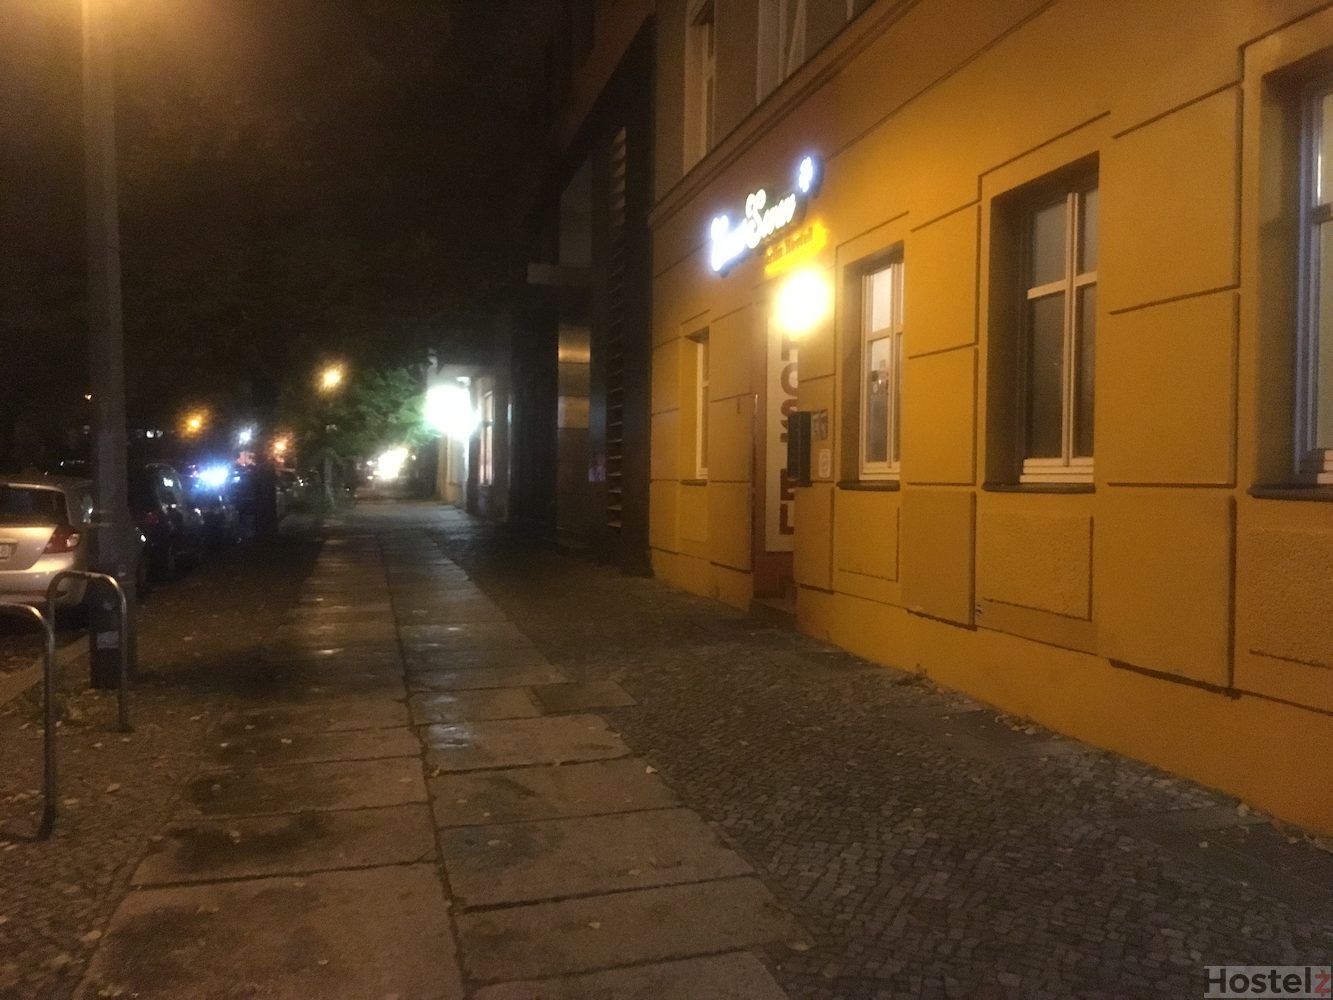 Hostel entrance (by night)